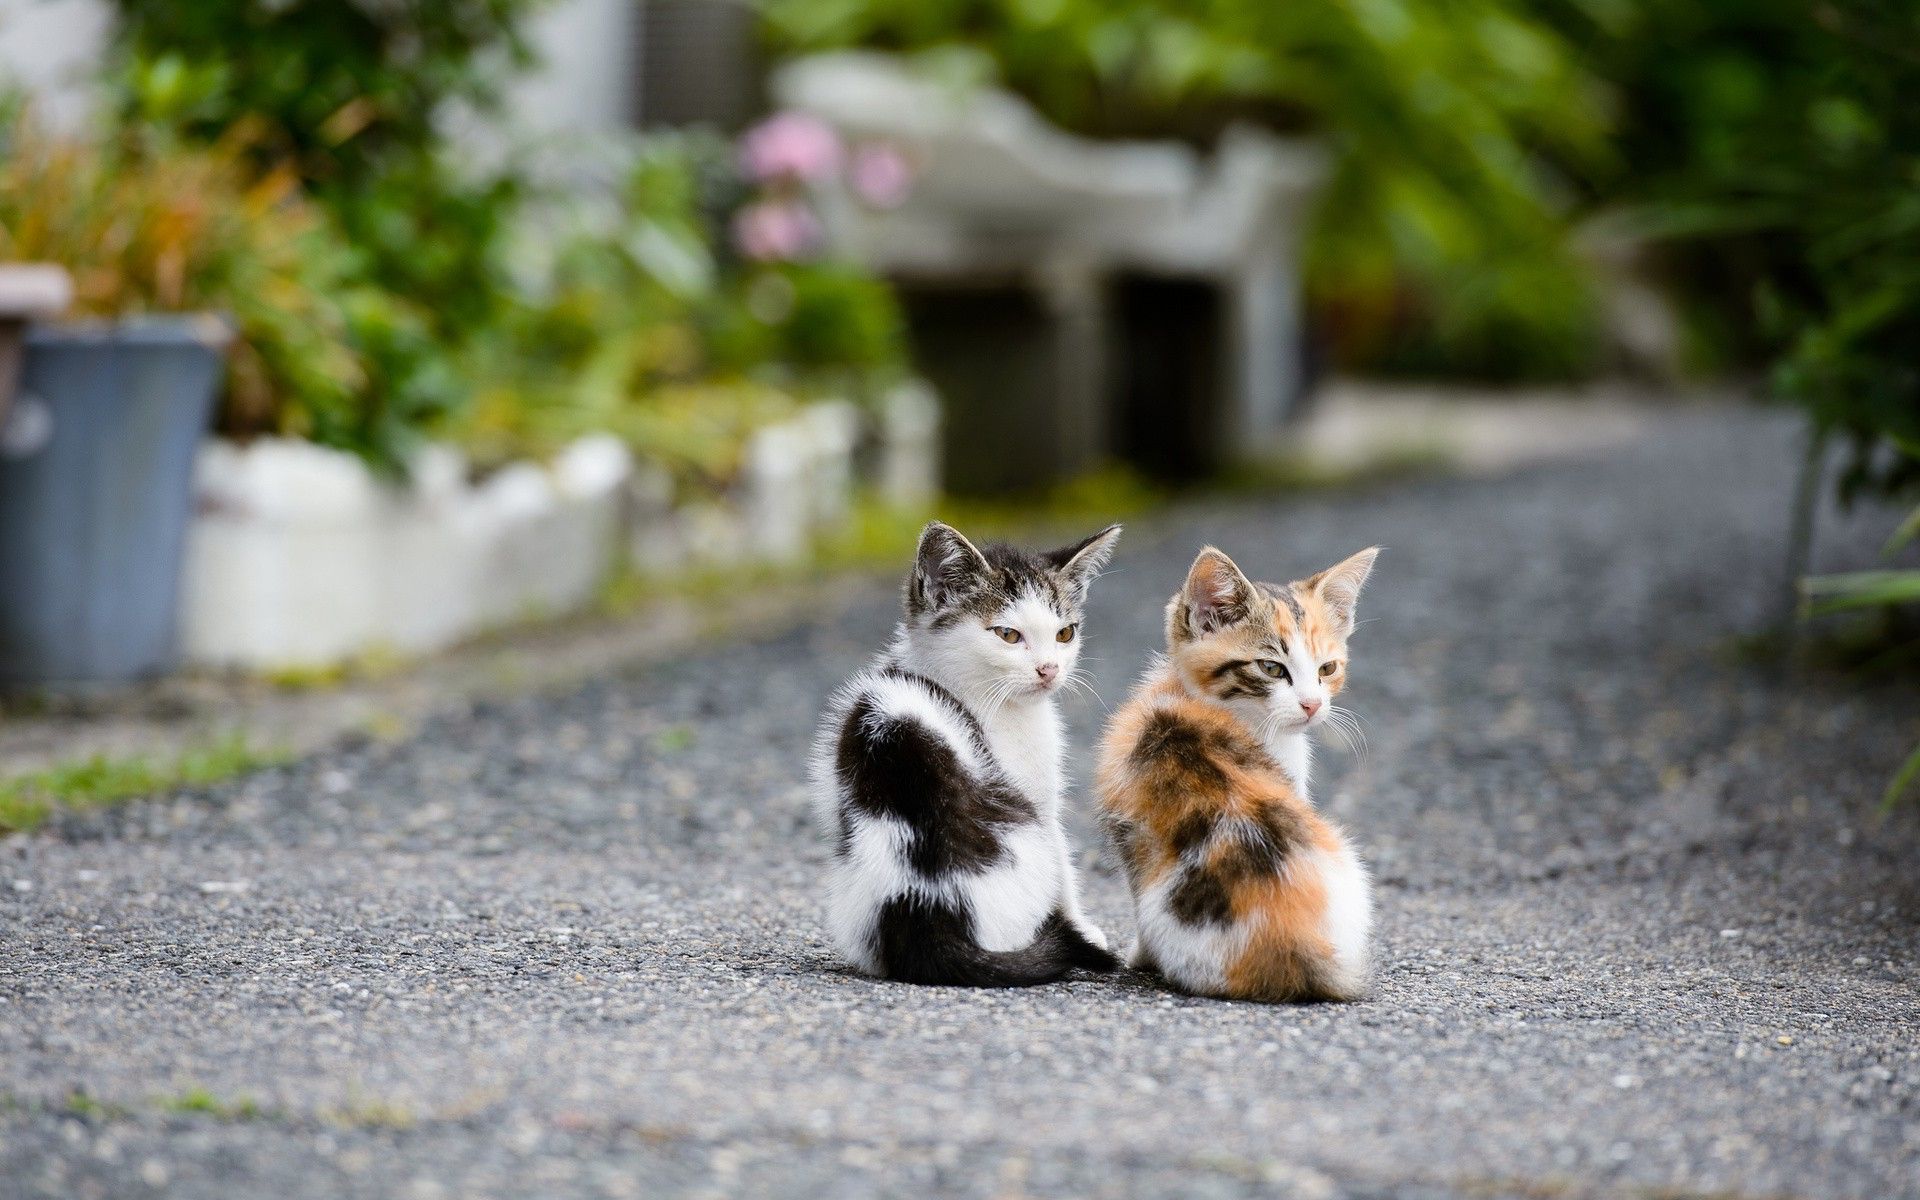 Little kittens